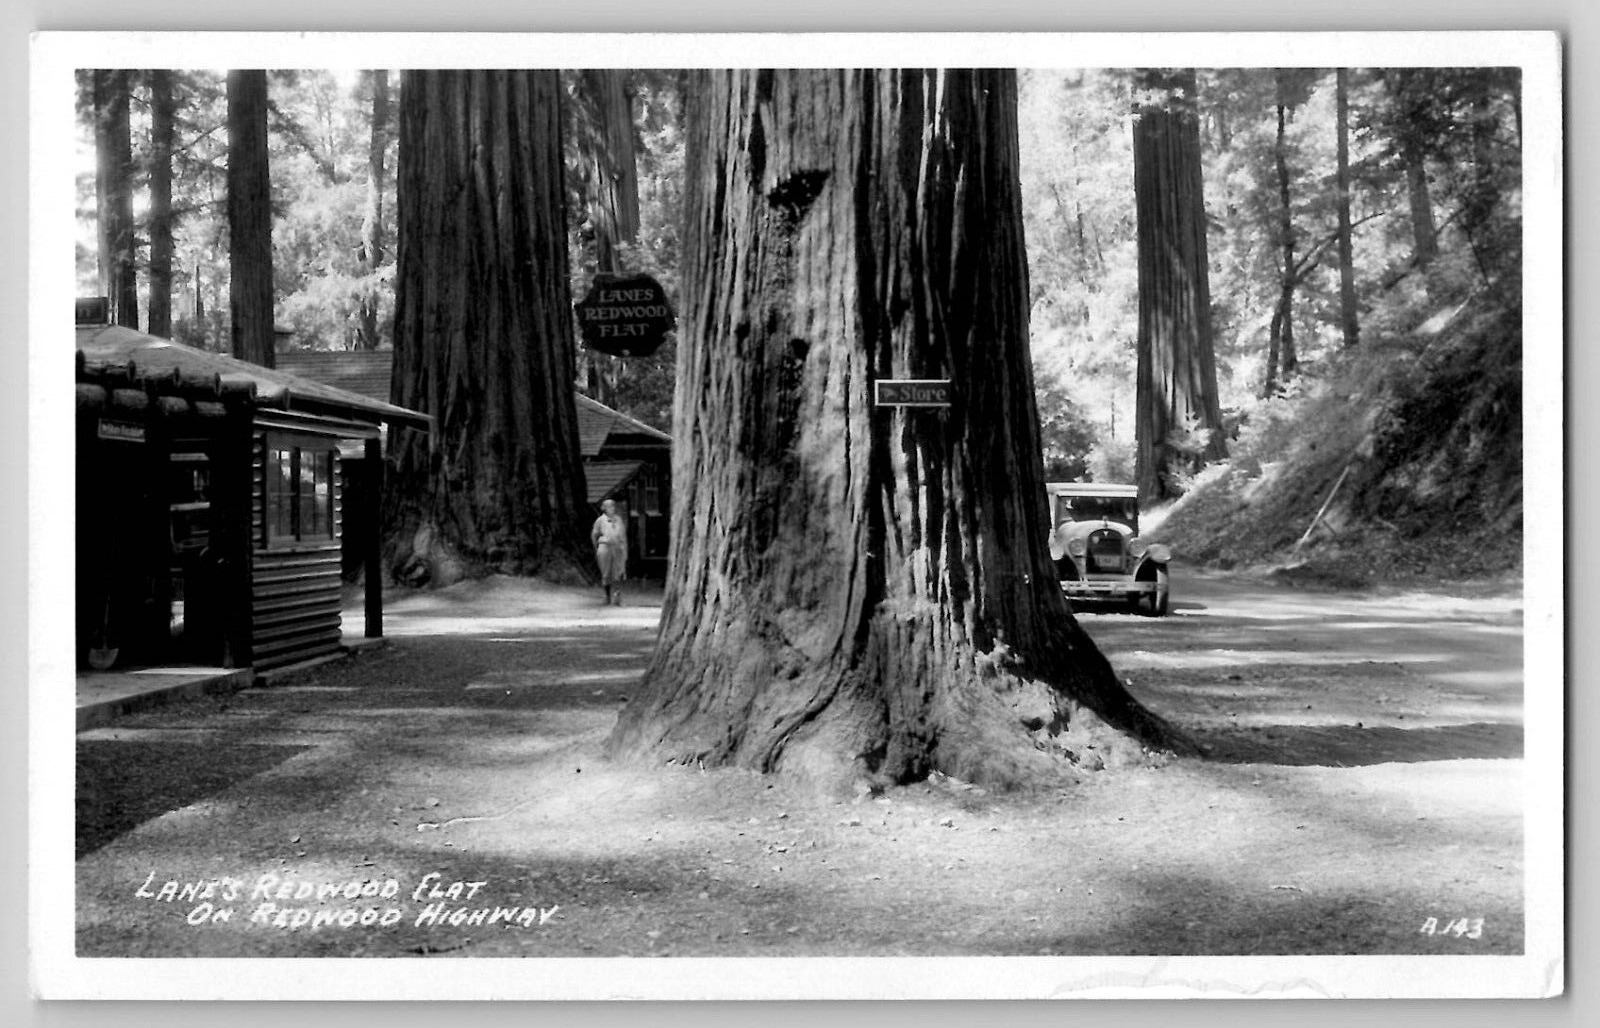 Lane's Redwood Flat Store Highway c1930's California CA RPPC Real Photo Postcard